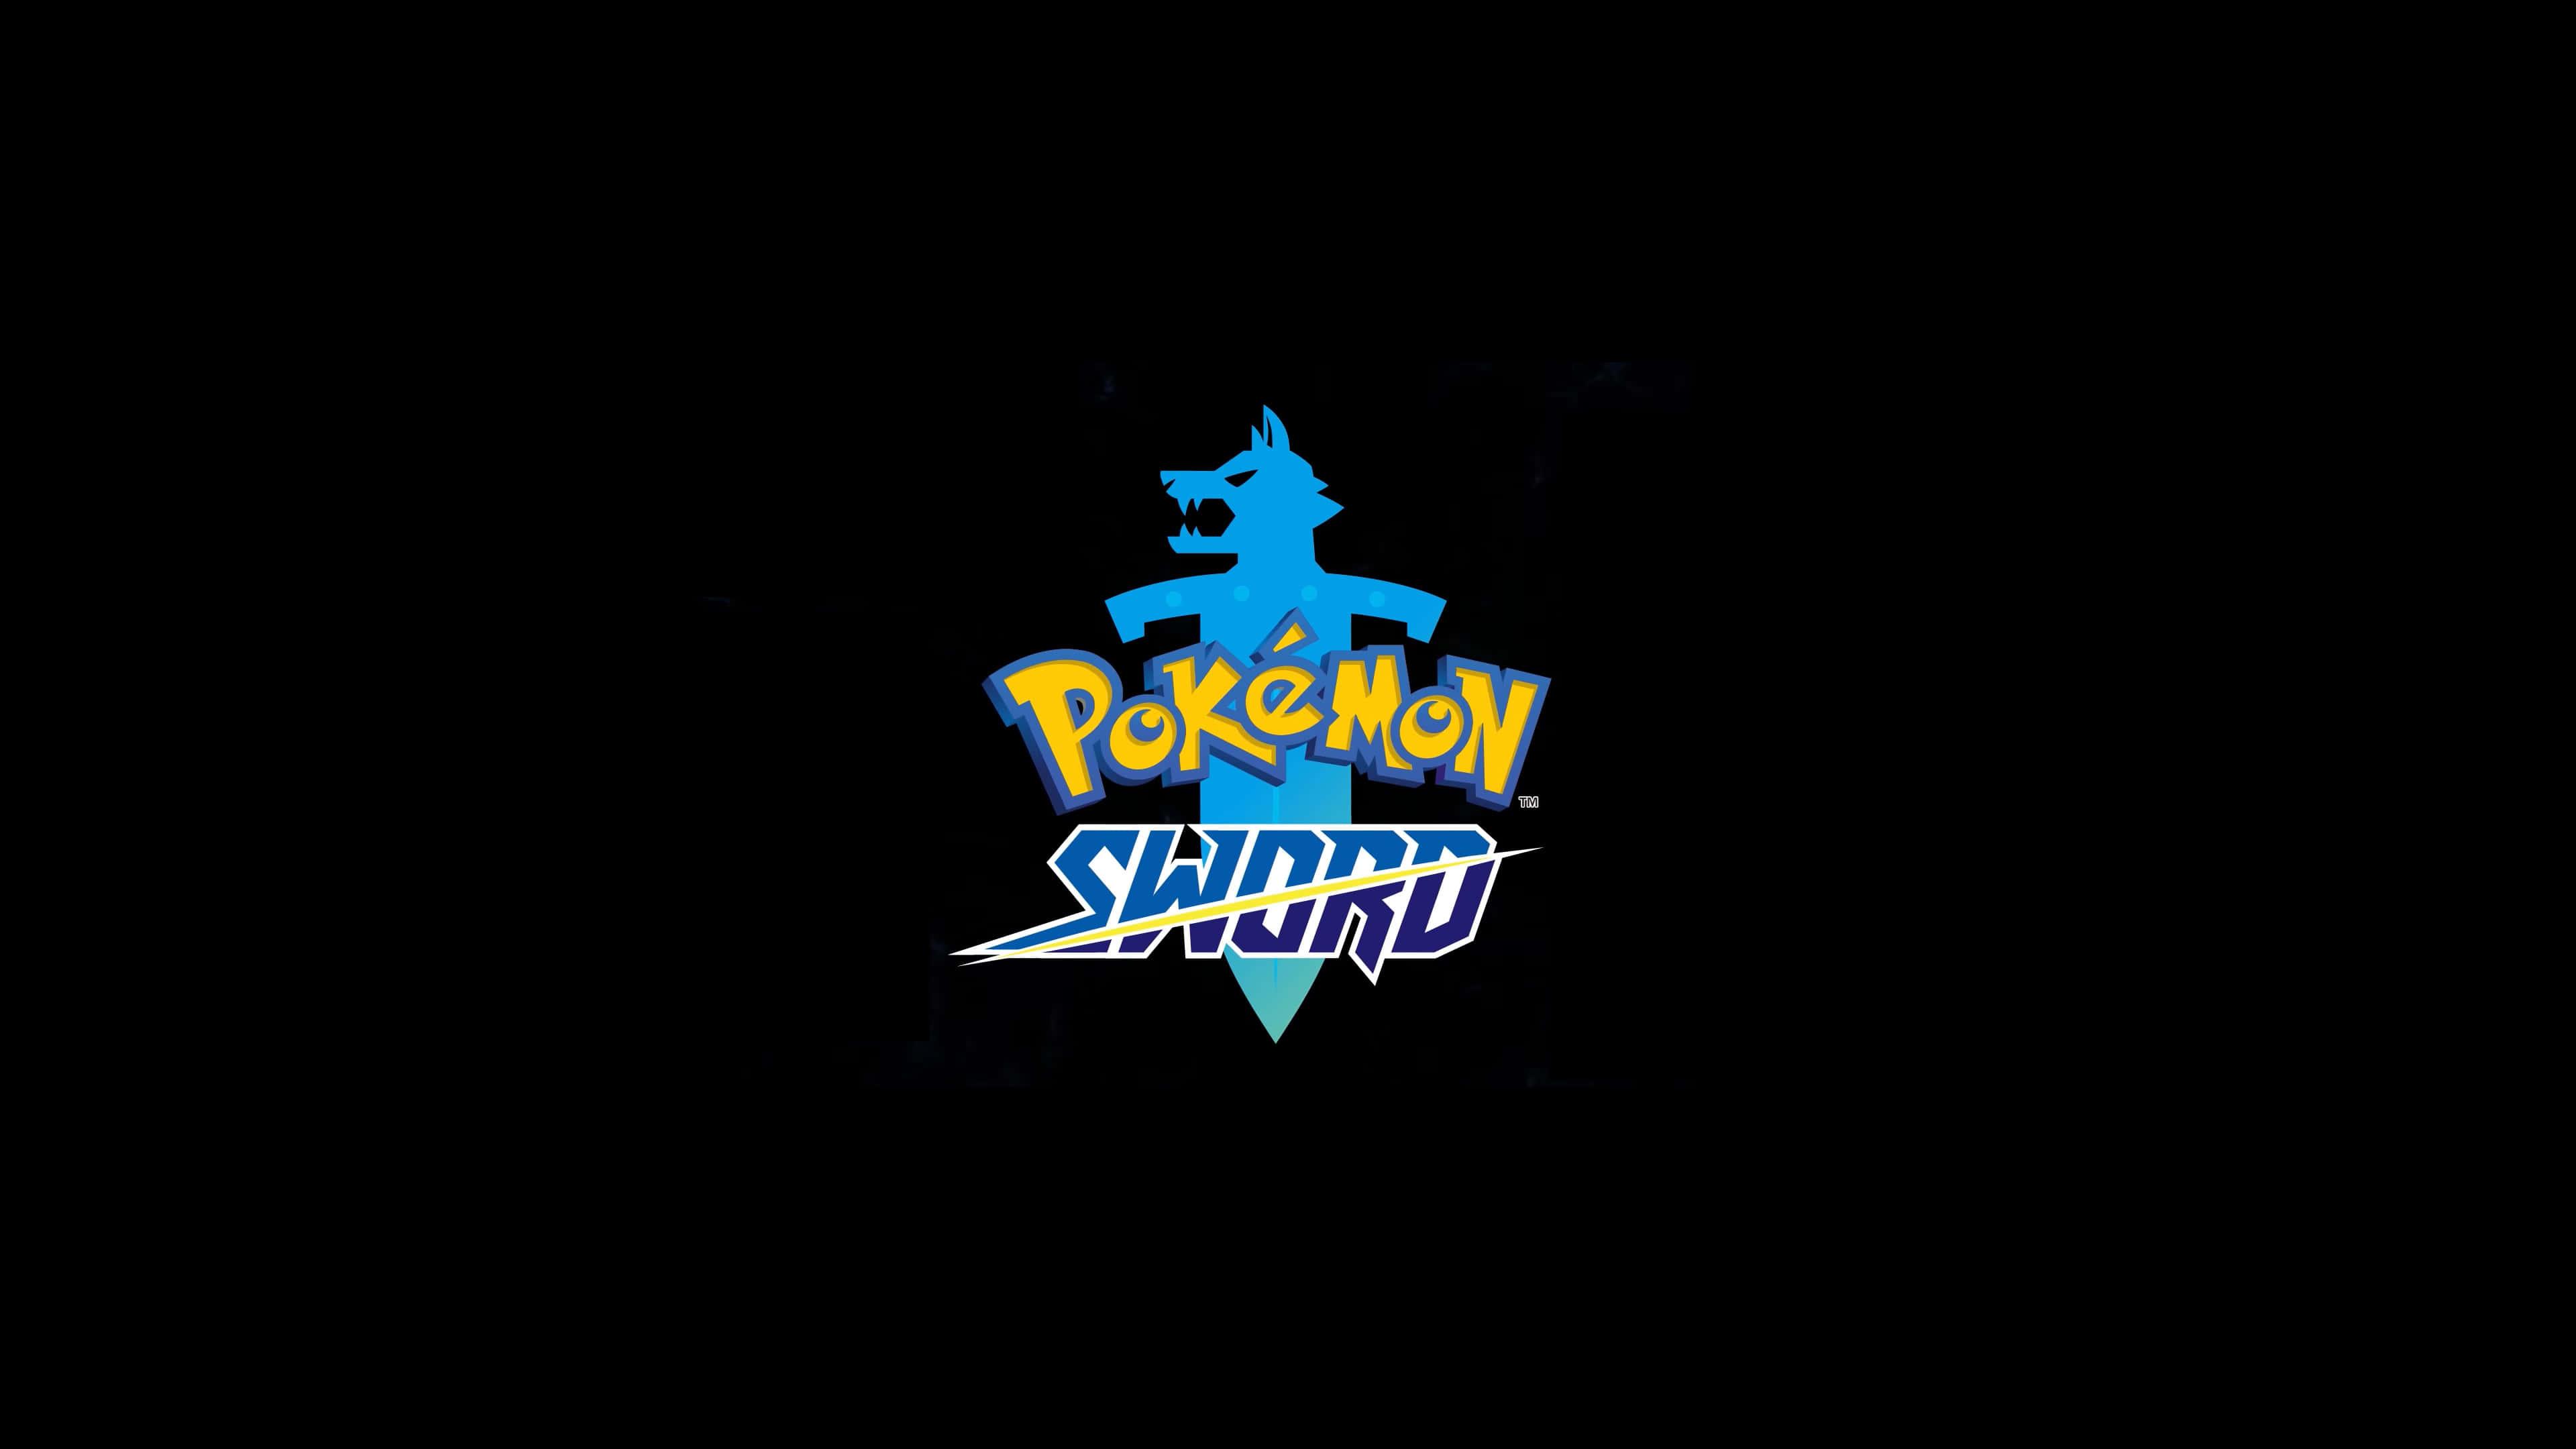 Pokemon Sword Logo UHD 4K Wallpaper